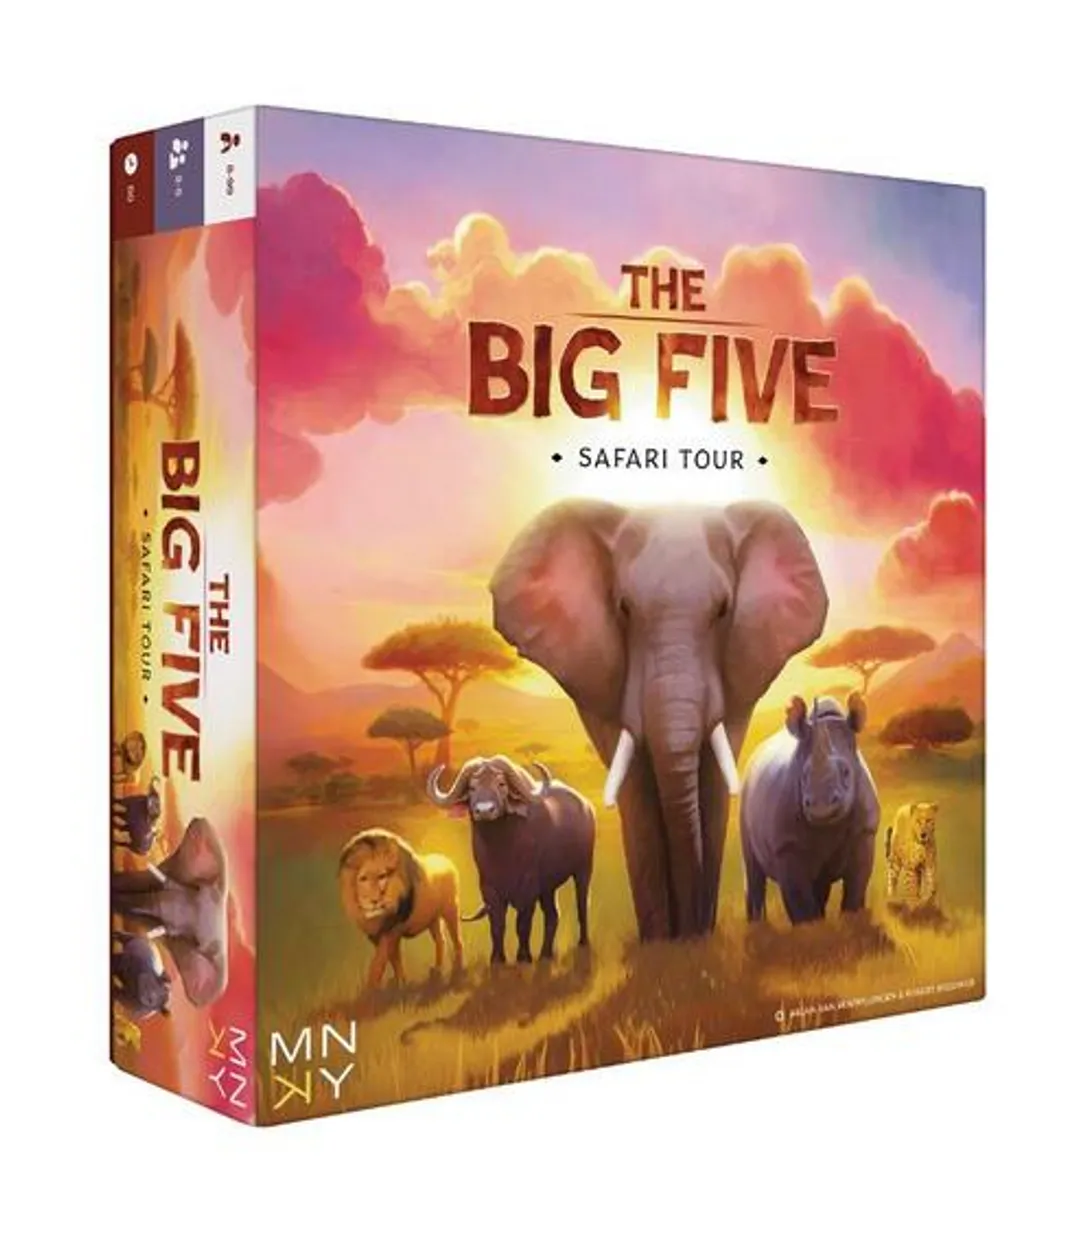 The Big Five